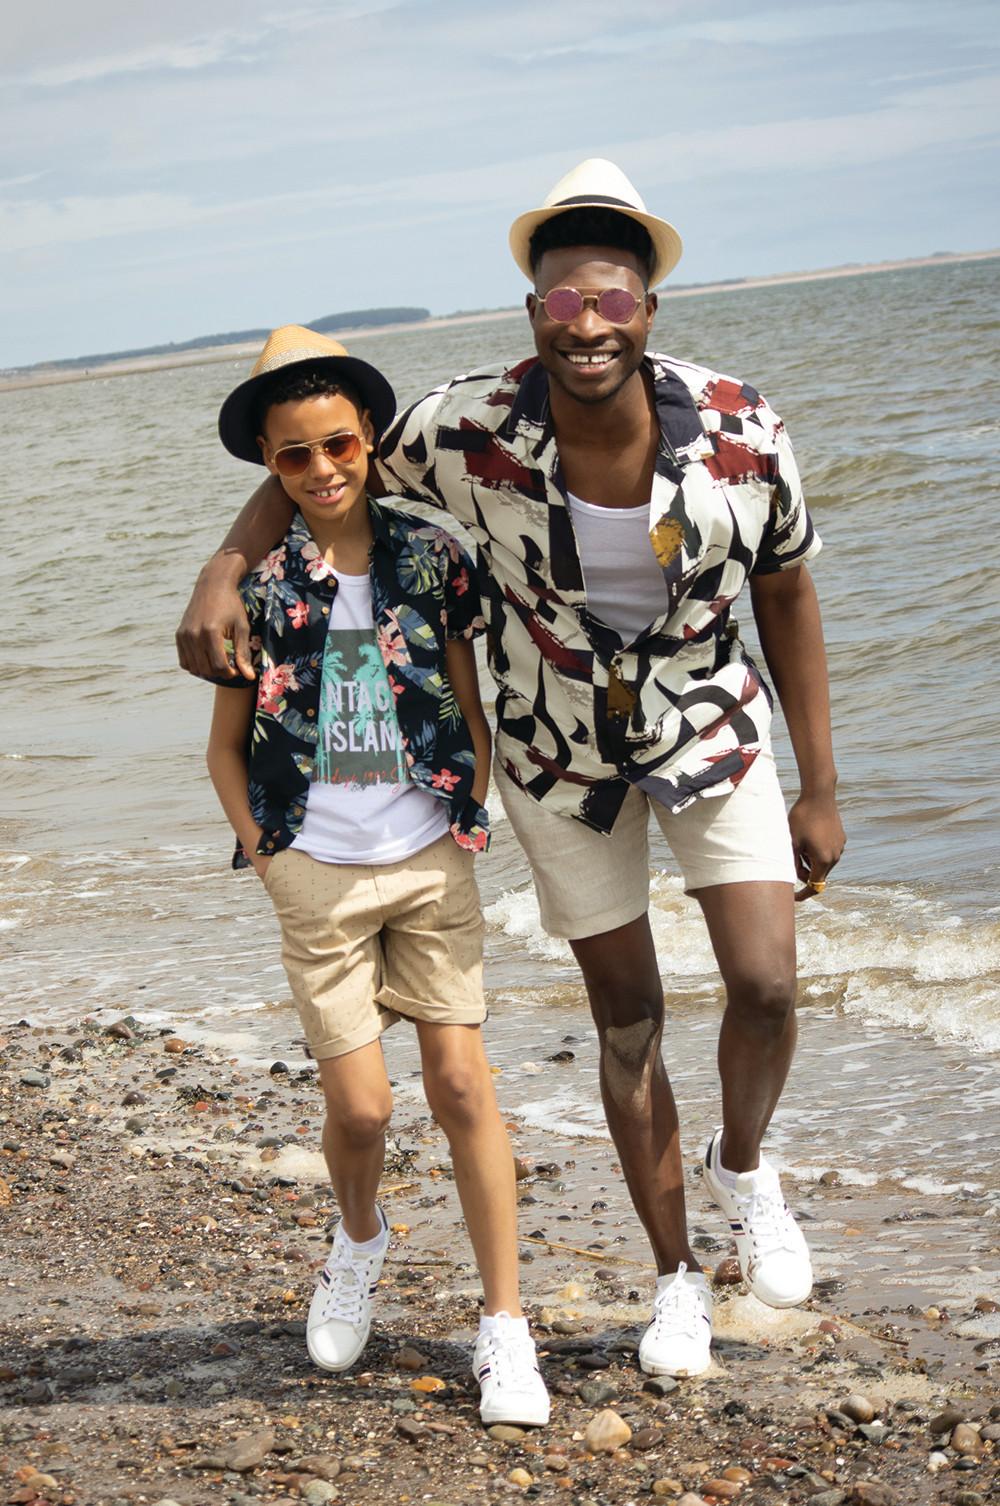 Male models wearing bold print shirts and shorts on beach